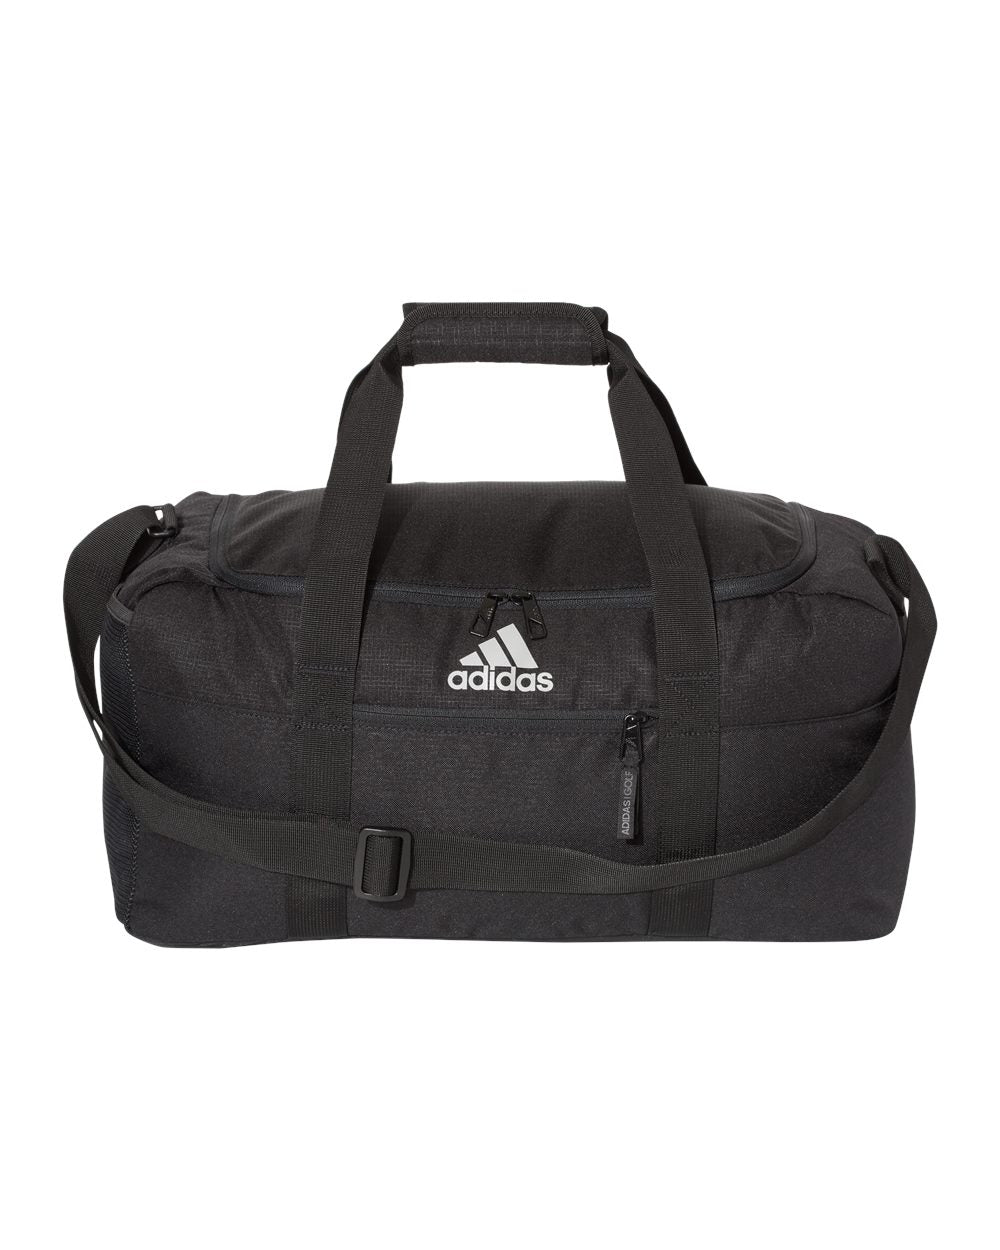 Adidas 35L Weekend Duffel Bag-8